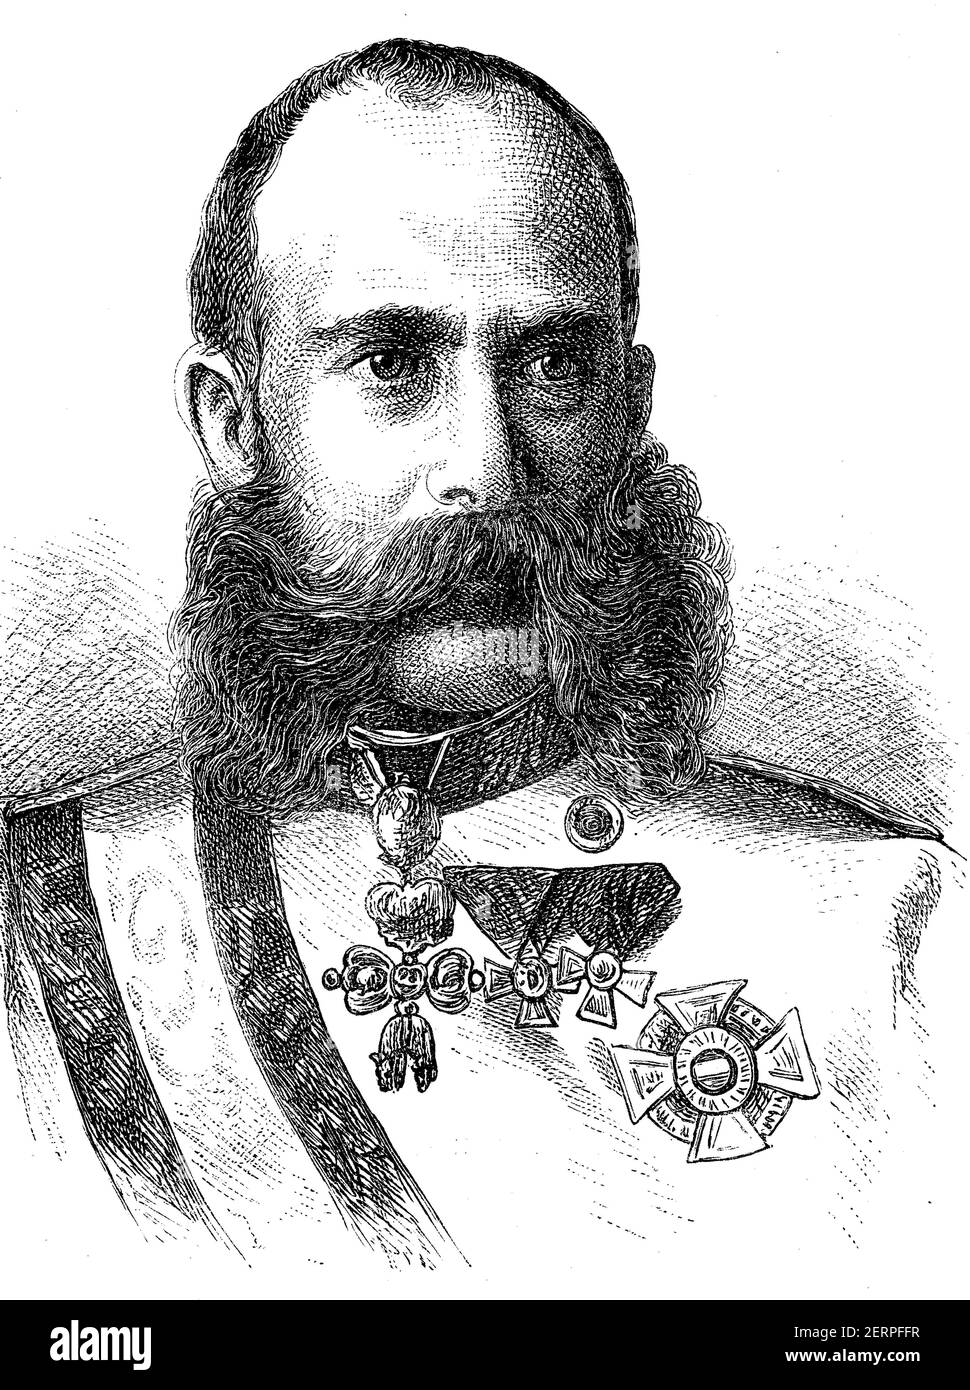 Franz Joseph I, August 18, 1830 - November 21, 1916, also Archduke Franz Joseph Karl of Austria from the House of Habsburg-Lorraine, was Emperor of Au Stock Photo